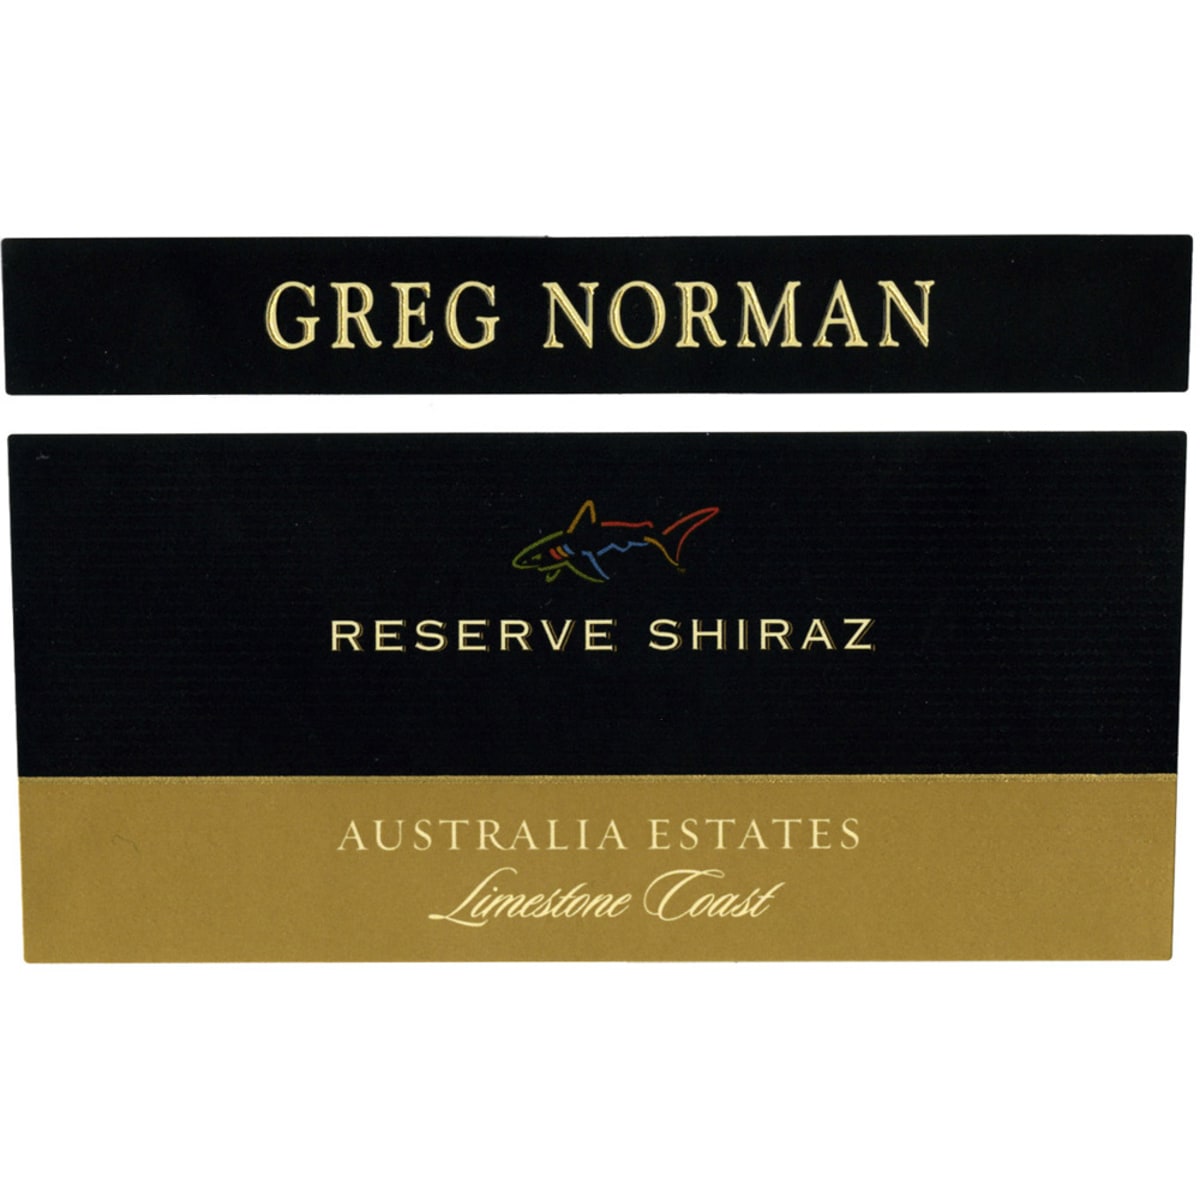 Greg Norman Estates Reserve Shiraz 2002 Front Label